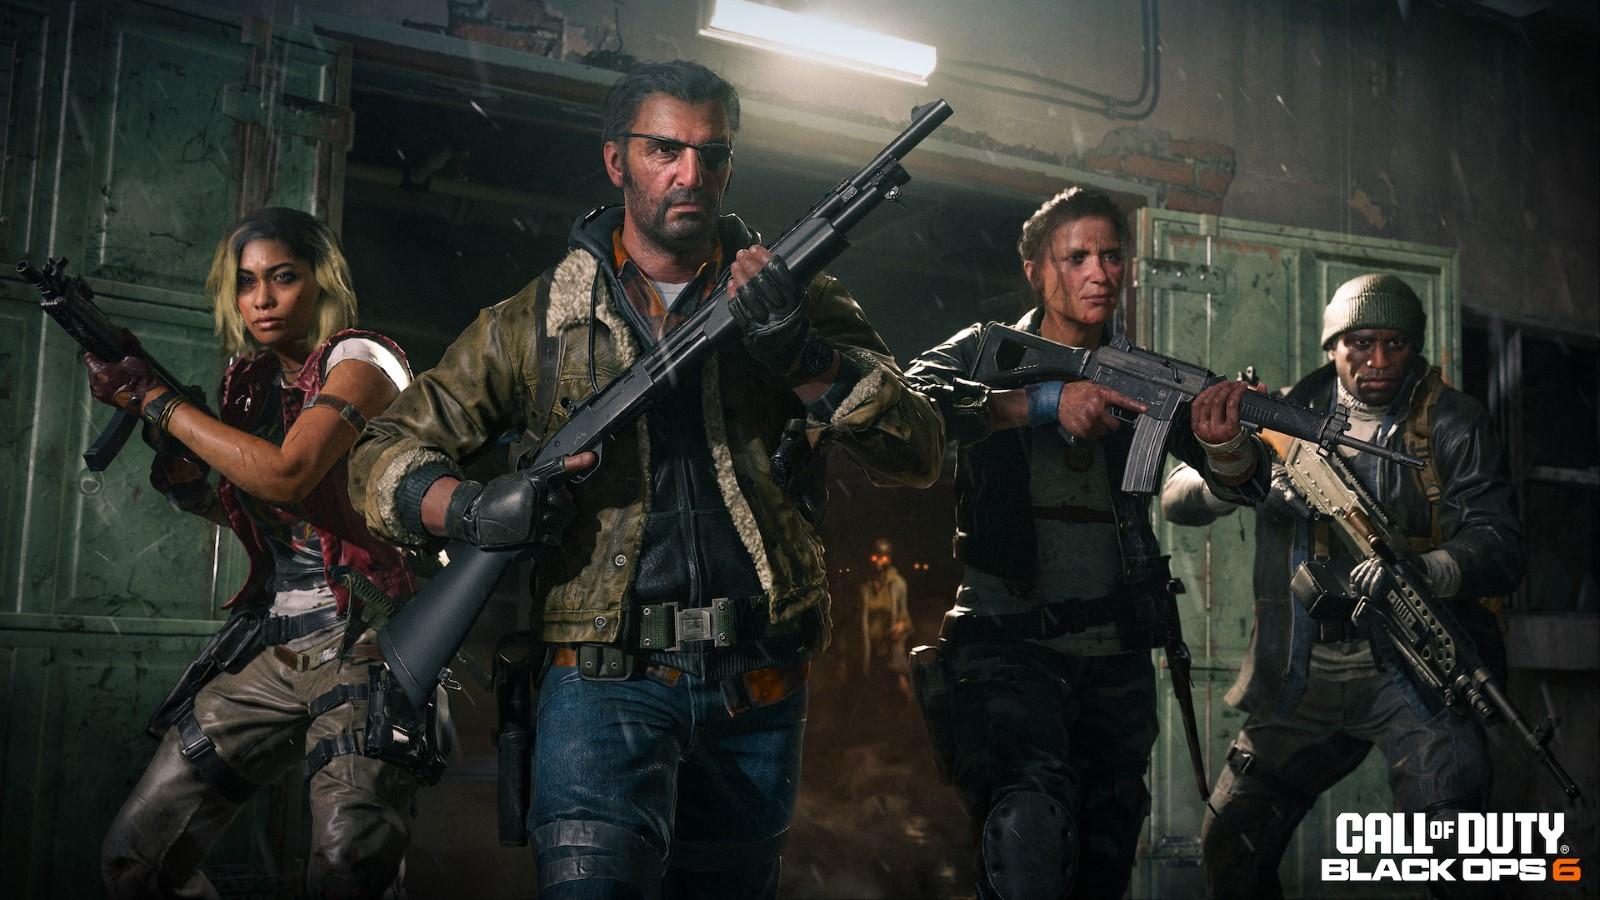 A screenshot featuring Call of Duty Black Ops 6 cast.